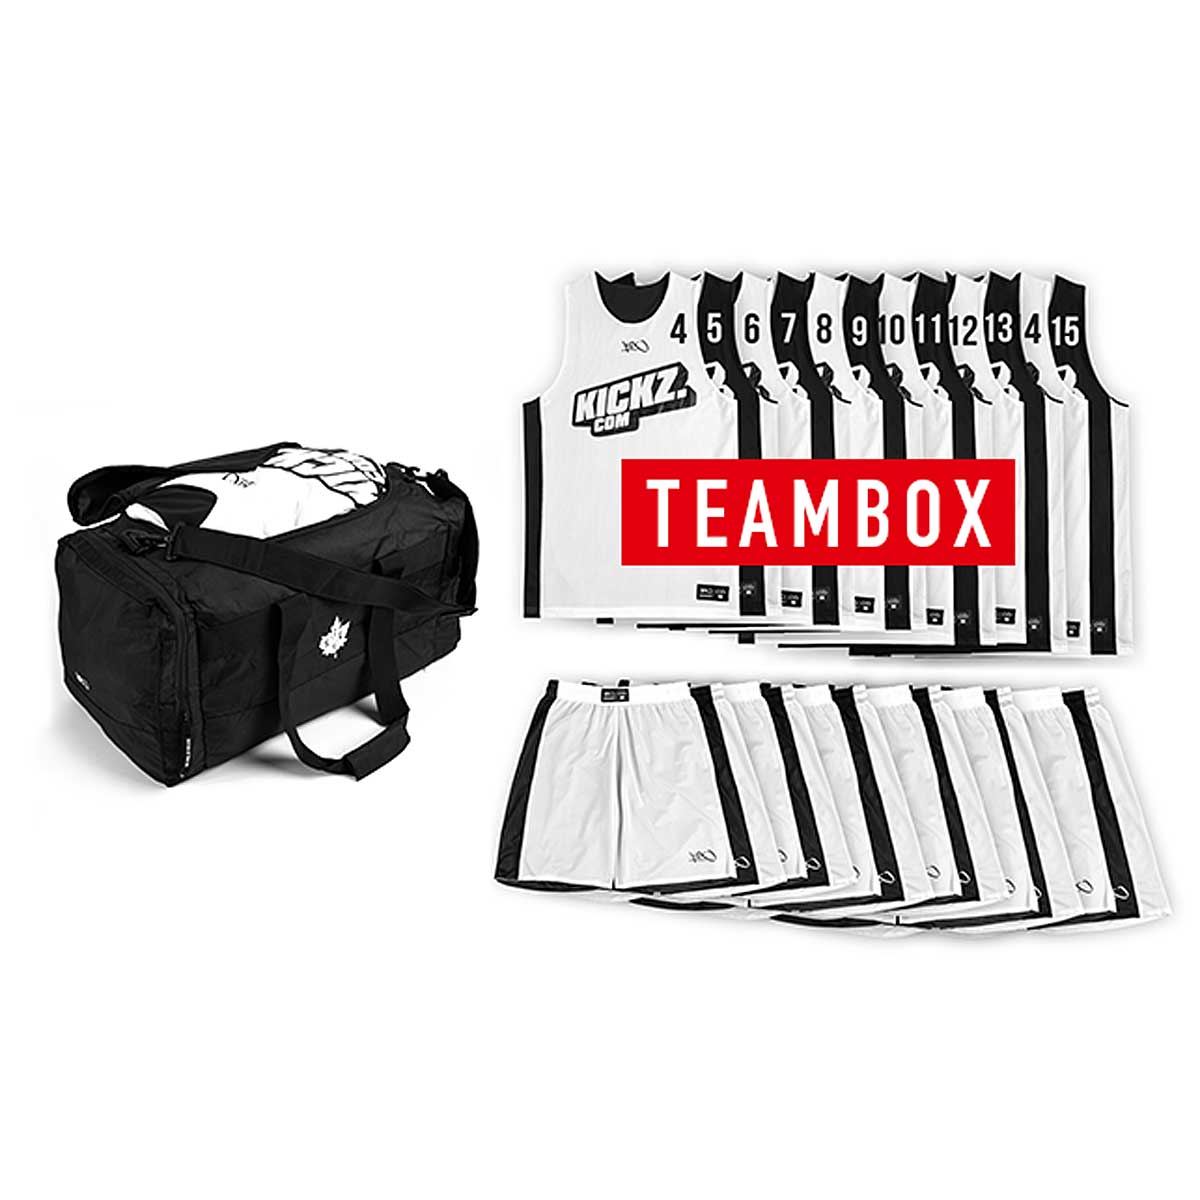 Kickz Teambox Rev Game Set Junior, Black/White